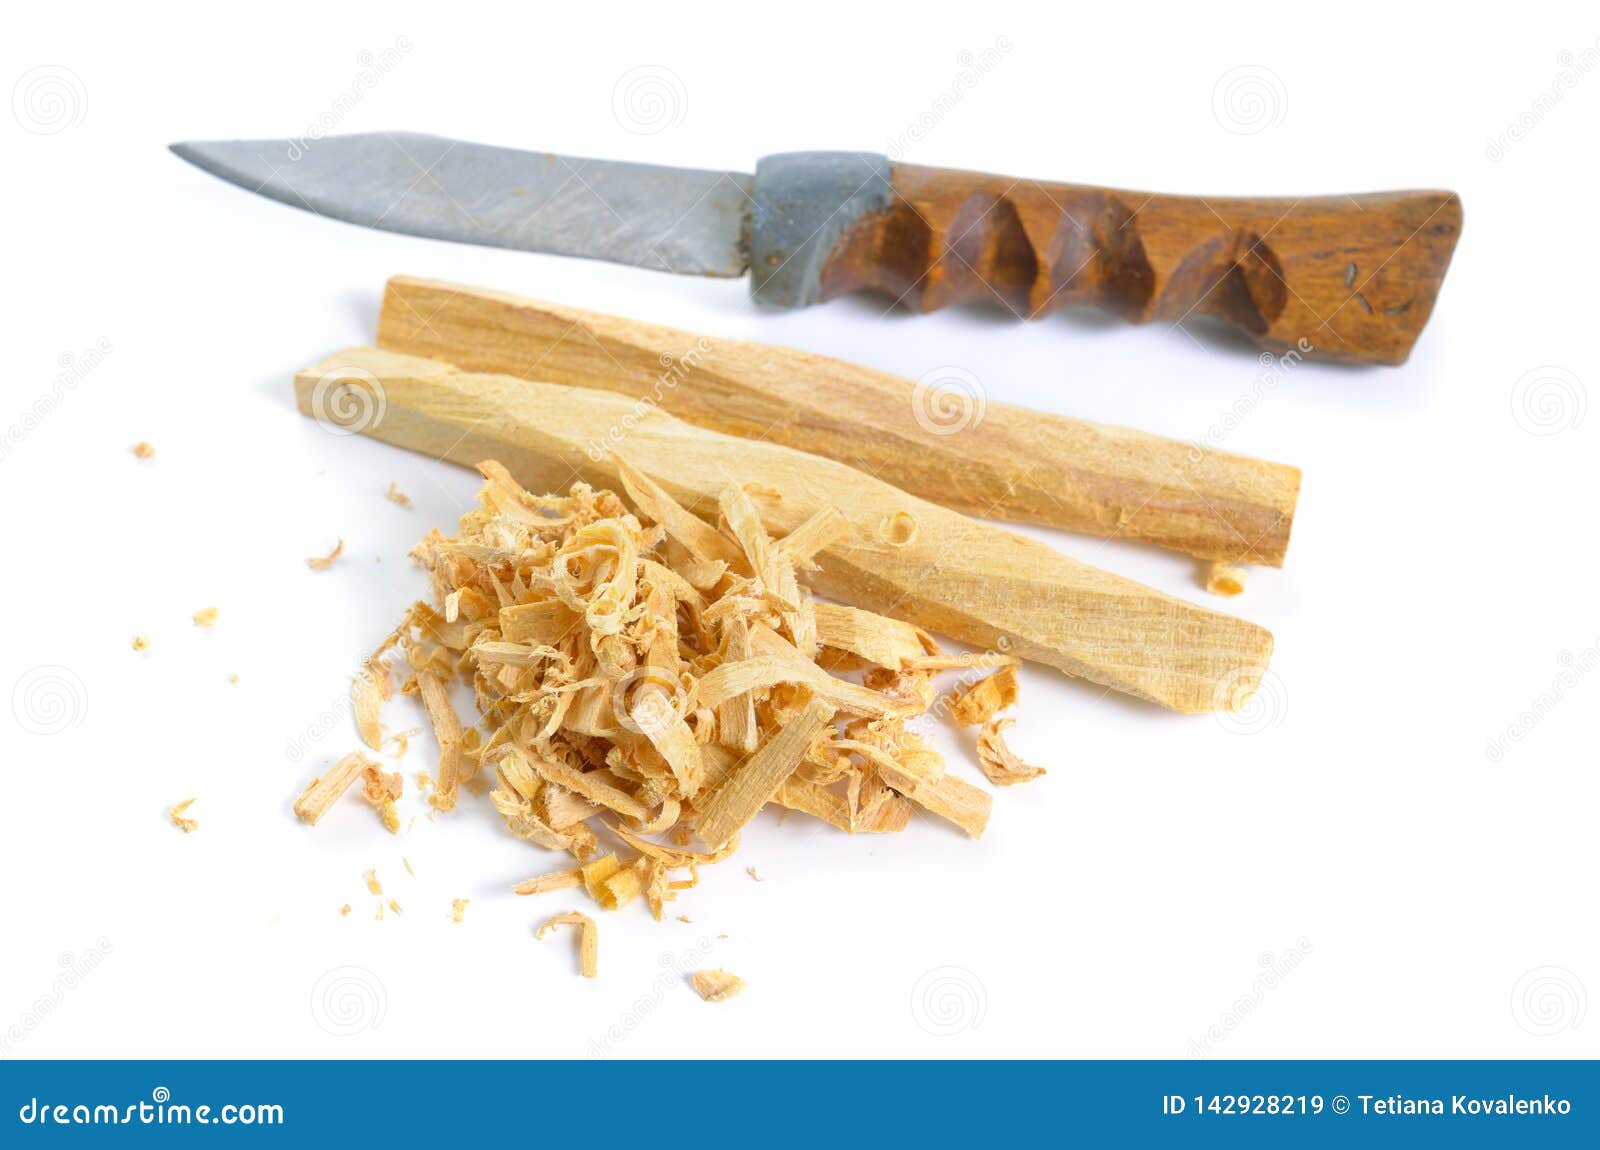 palo santo, holy wood sticks with handmade knife  on white background.